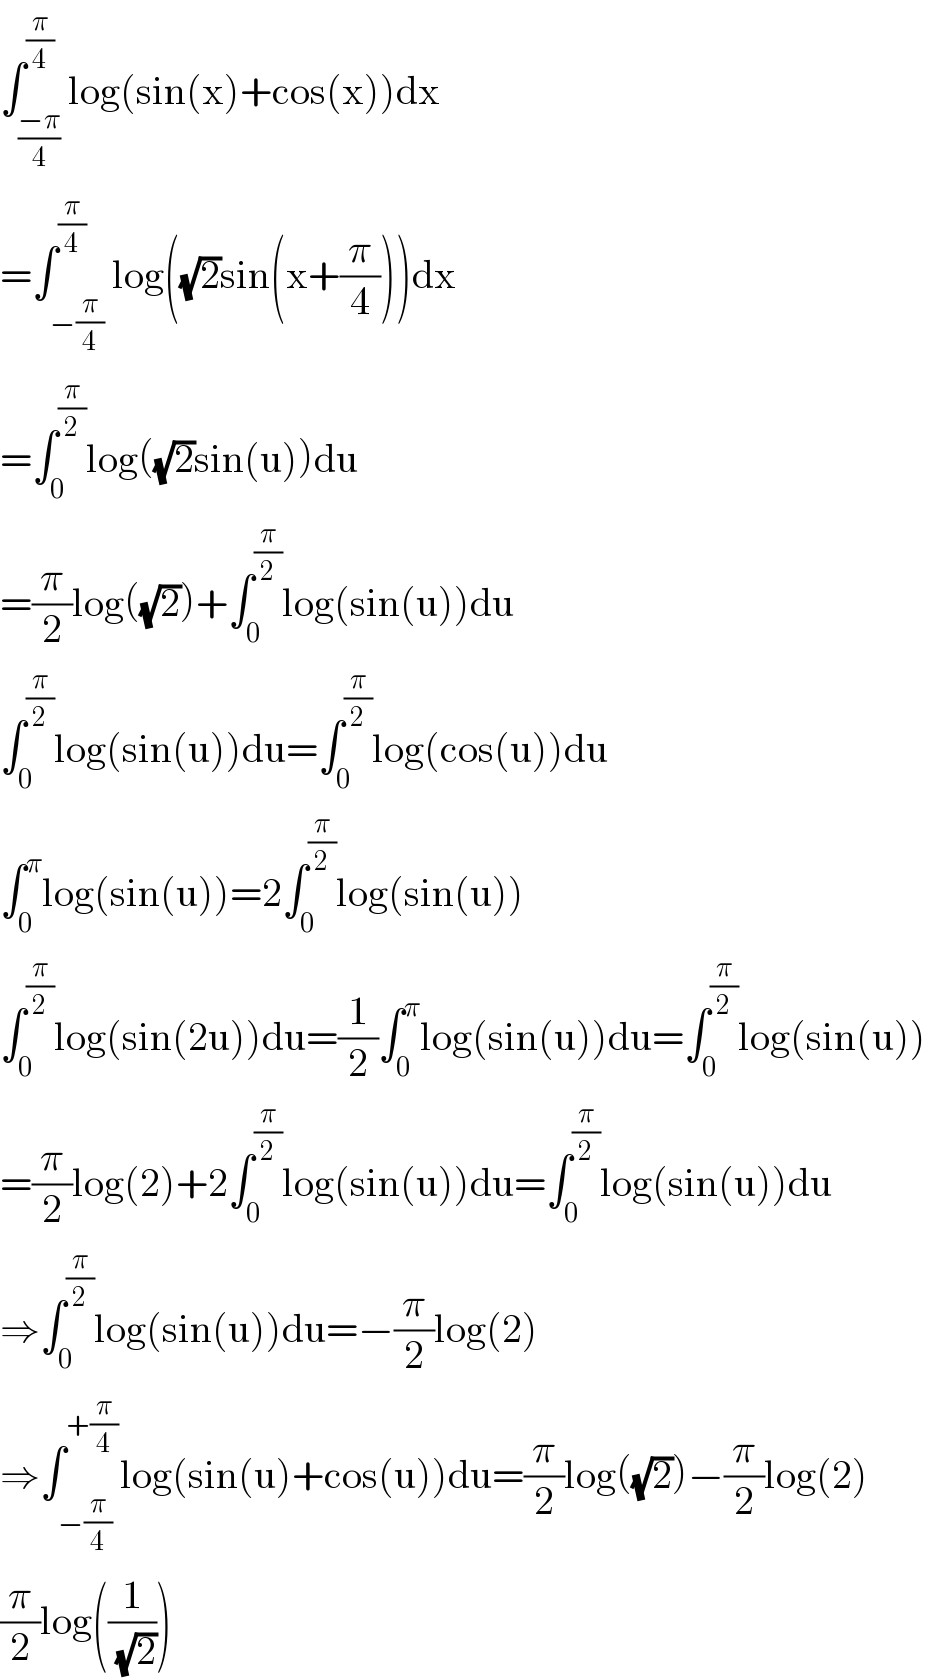 ∫_((−π)/4) ^(π/4) log(sin(x)+cos(x))dx  =∫_(−(π/4)) ^(π/4) log((√2)sin(x+(π/4)))dx  =∫_0 ^(π/2) log((√2)sin(u))du  =(π/2)log((√2))+∫_0 ^(π/2) log(sin(u))du  ∫_0 ^(π/2) log(sin(u))du=∫_0 ^(π/2) log(cos(u))du  ∫_0 ^π log(sin(u))=2∫_0 ^(π/2) log(sin(u))  ∫_0 ^(π/2) log(sin(2u))du=(1/2)∫_0 ^π log(sin(u))du=∫_0 ^(π/2) log(sin(u))  =(π/2)log(2)+2∫_0 ^(π/2) log(sin(u))du=∫_0 ^(π/2) log(sin(u))du  ⇒∫_0 ^(π/2) log(sin(u))du=−(π/2)log(2)  ⇒∫_(−(π/4)) ^(+(π/4)) log(sin(u)+cos(u))du=(π/2)log((√2))−(π/2)log(2)  (π/2)log((1/(√2)))  